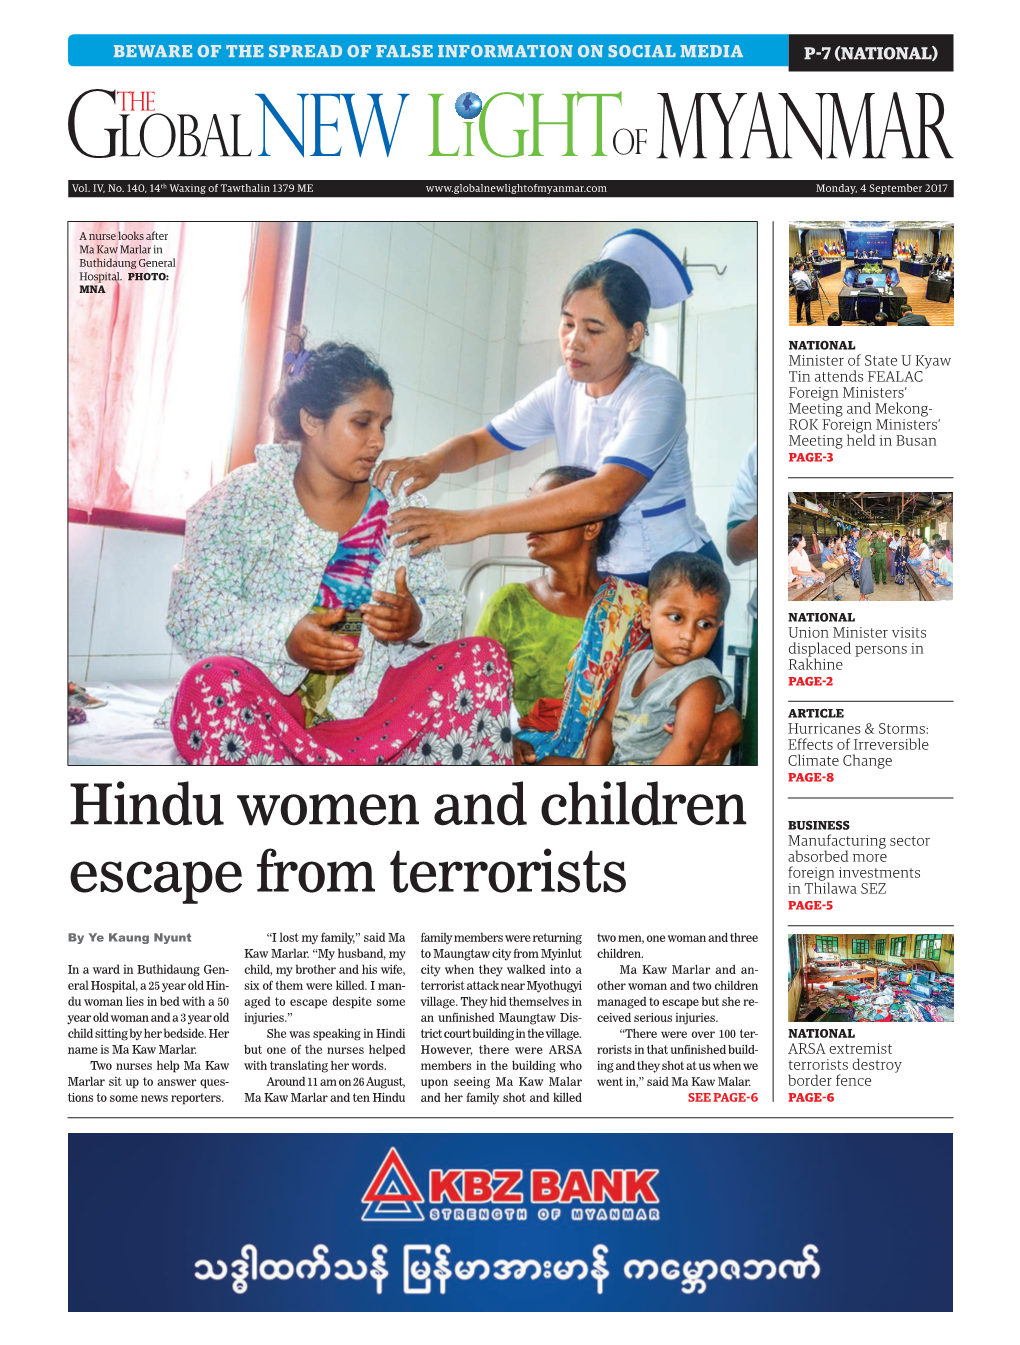 Hindu Women and Children Escape from Terrorists